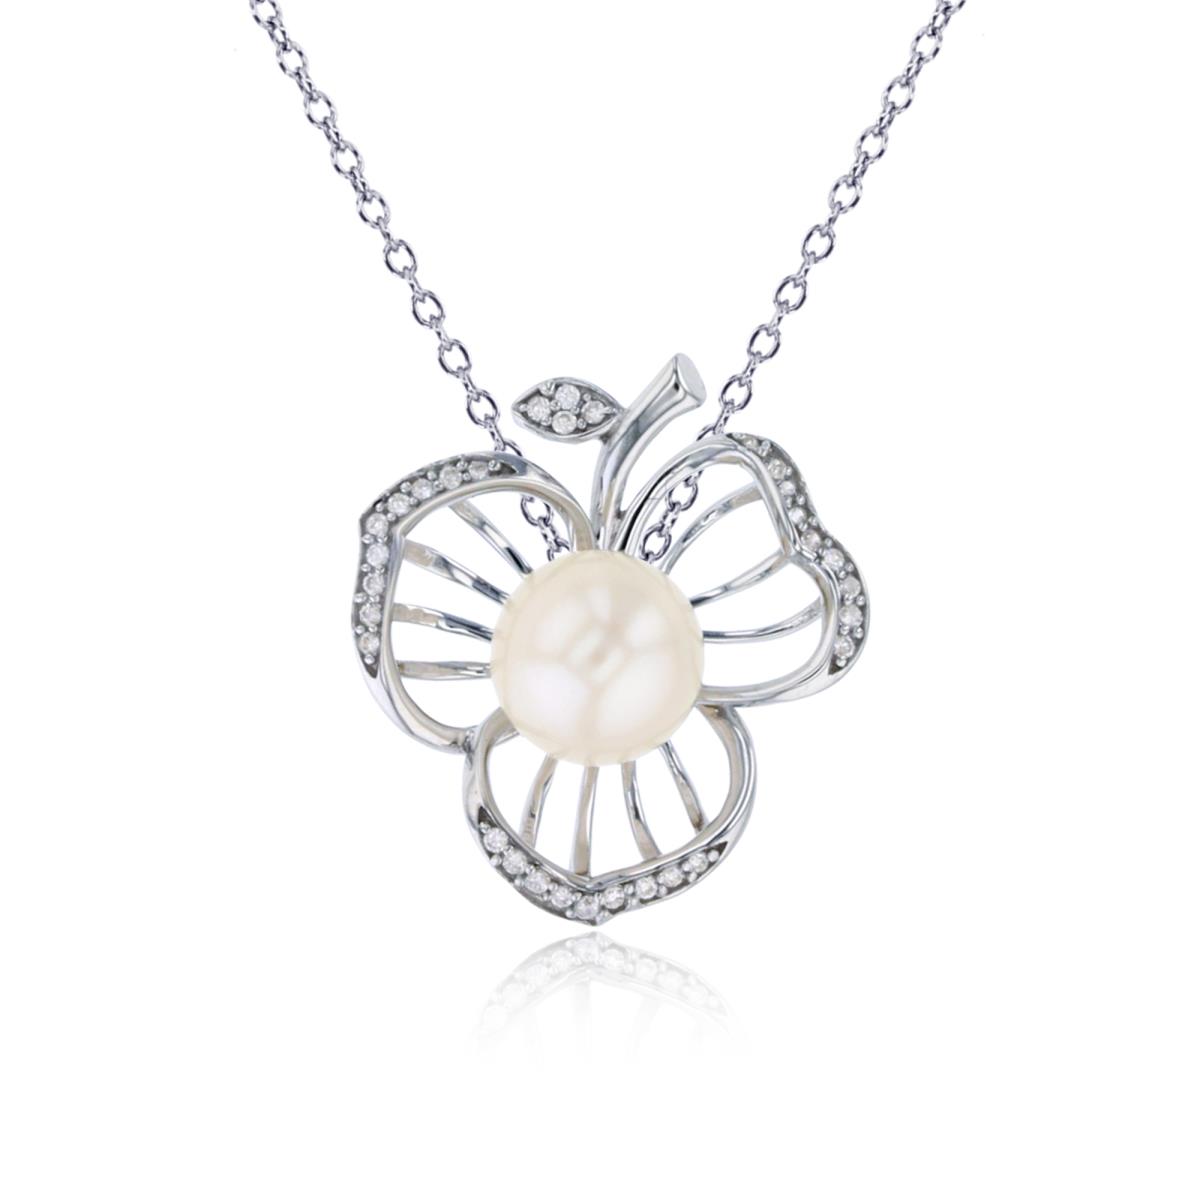 14K White Gold Rnd CZ & 7mm White Pearl Flower 18"Necklace